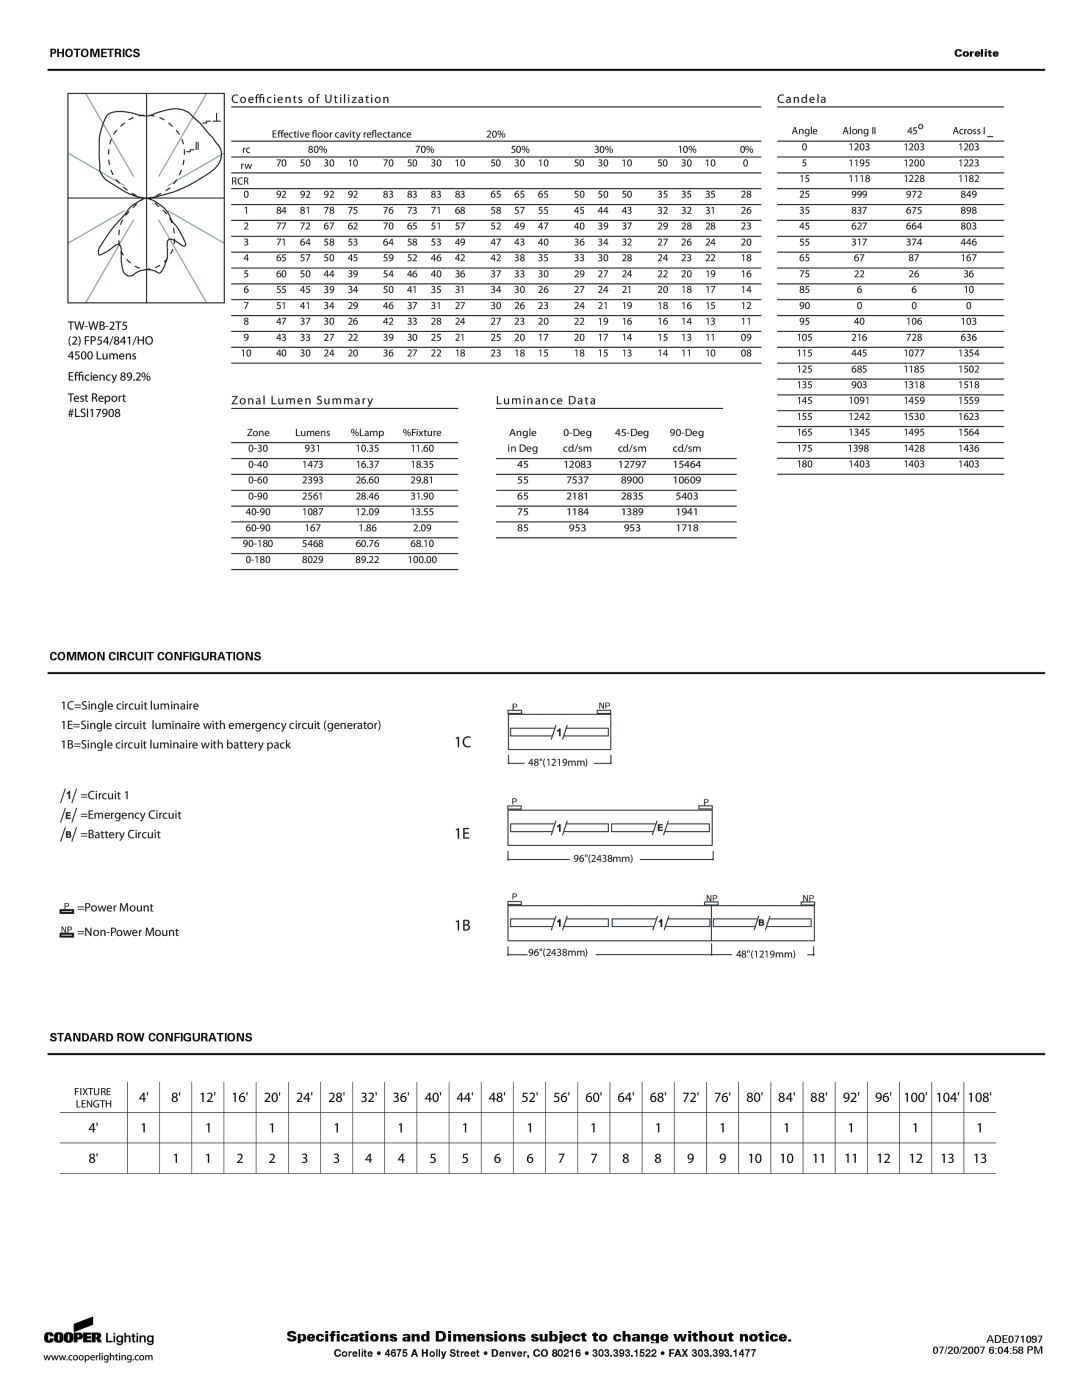 Cooper Lighting 2T5HO specifications PHOTOMETRICSCorelite, Common Circuit Configurations, Standard Row Configurations 